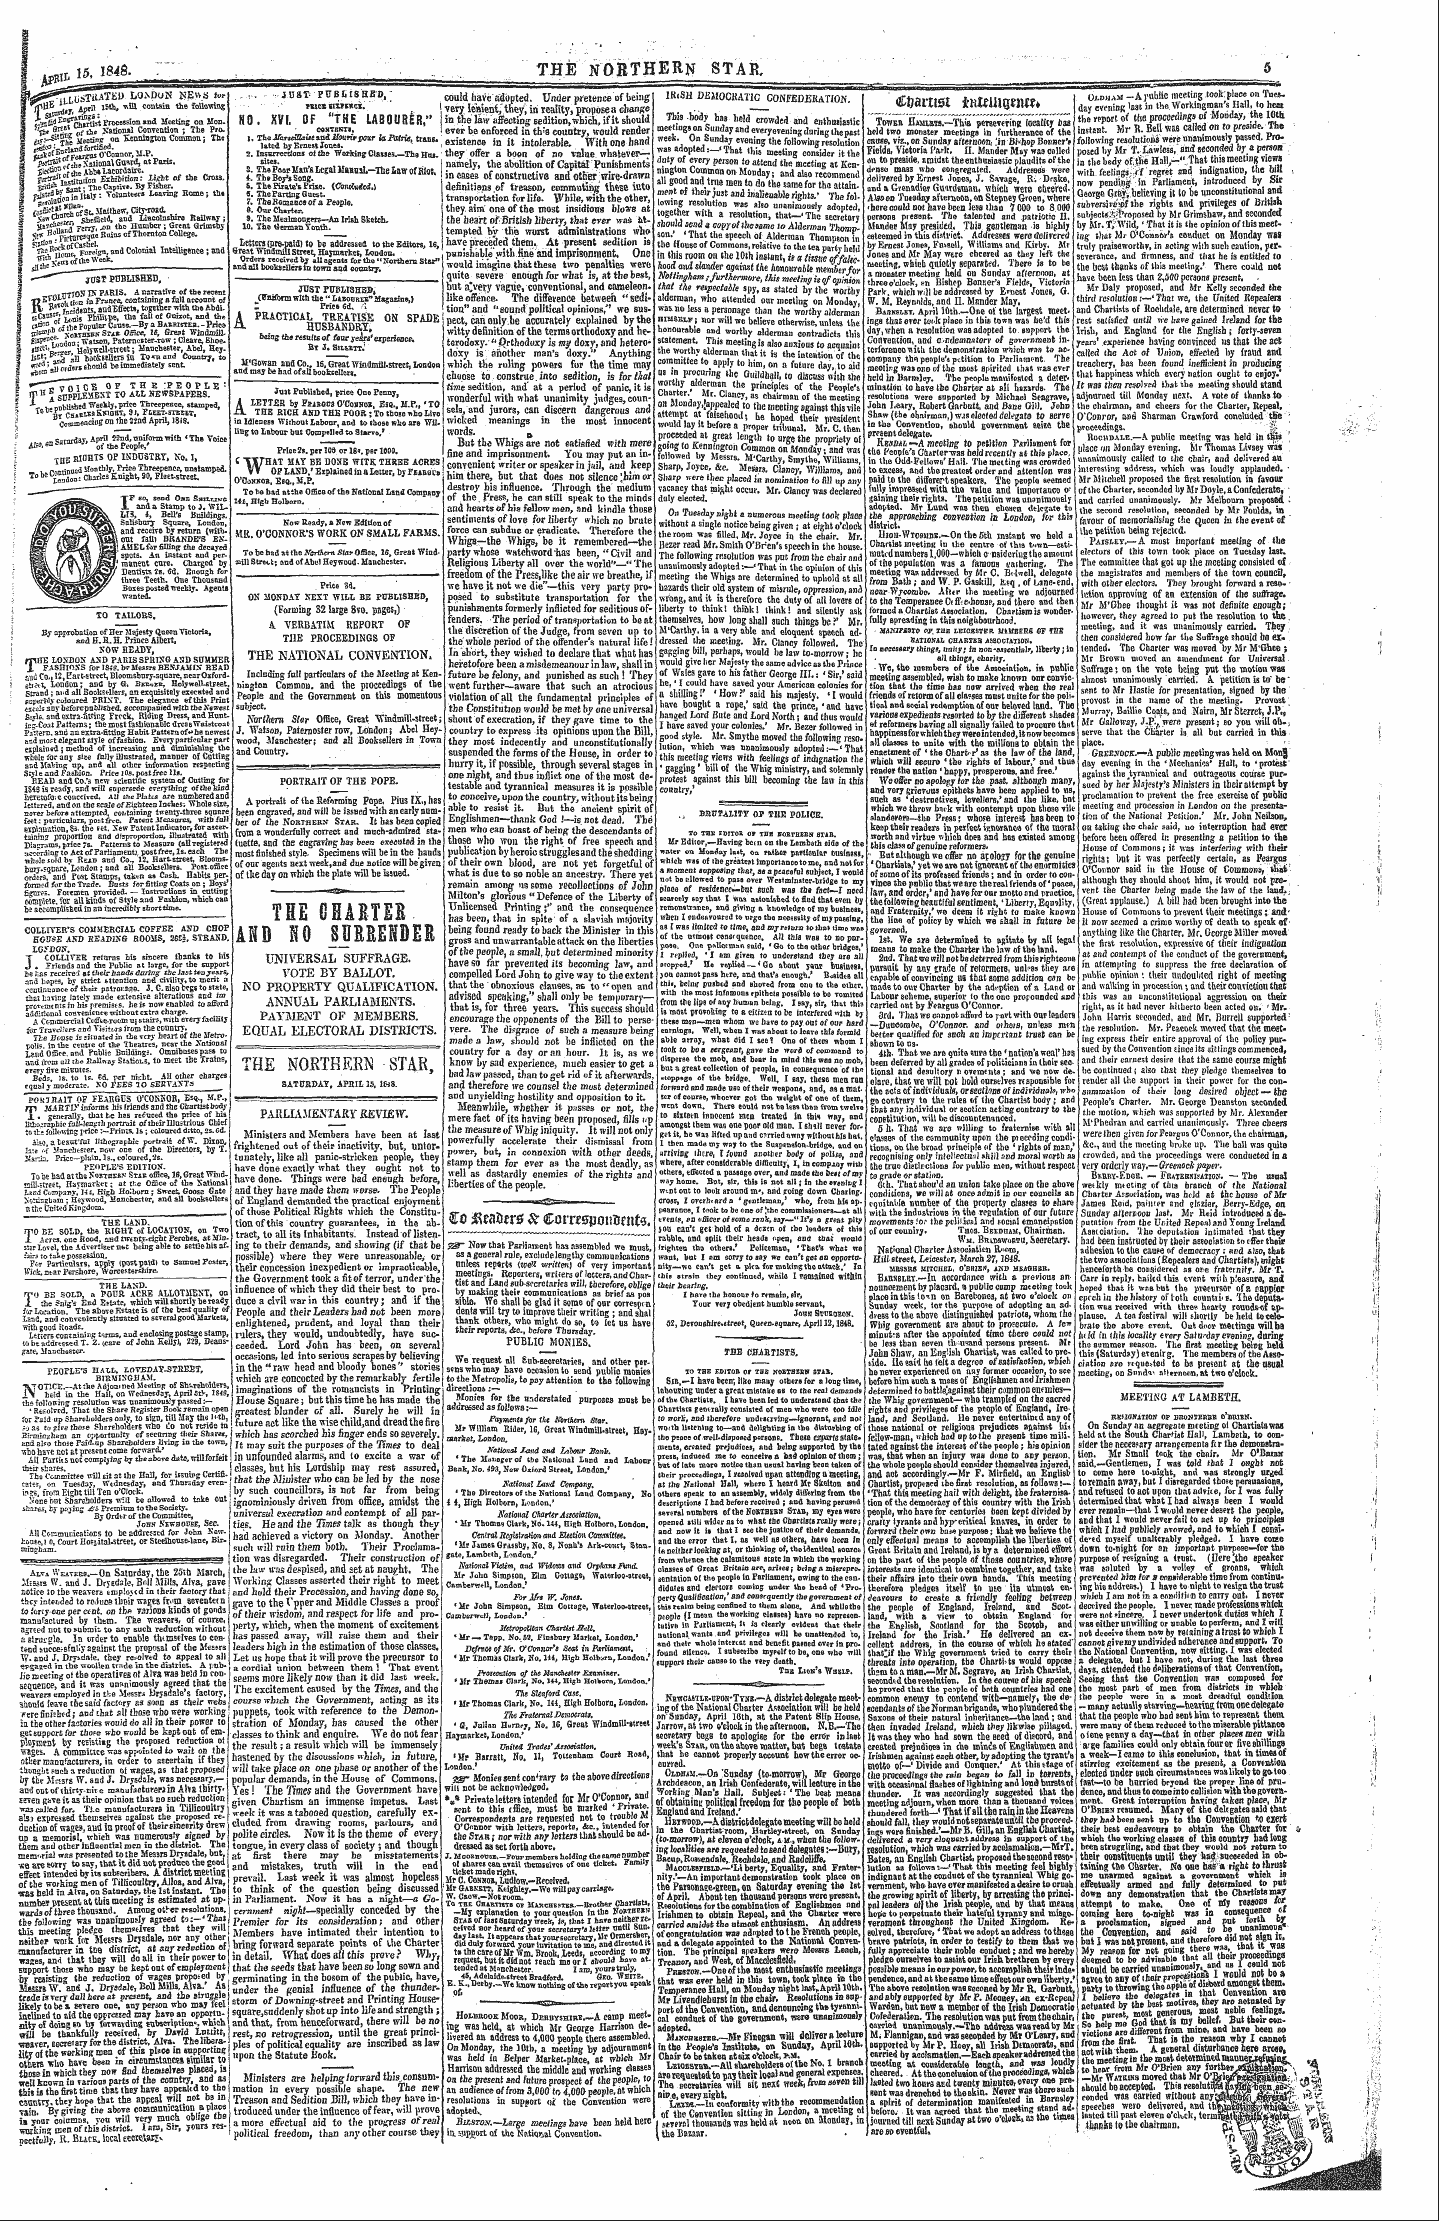 Northern Star (1837-1852): jS F Y, 4th edition - Co Urates & ®Mt£Spmirjntt0